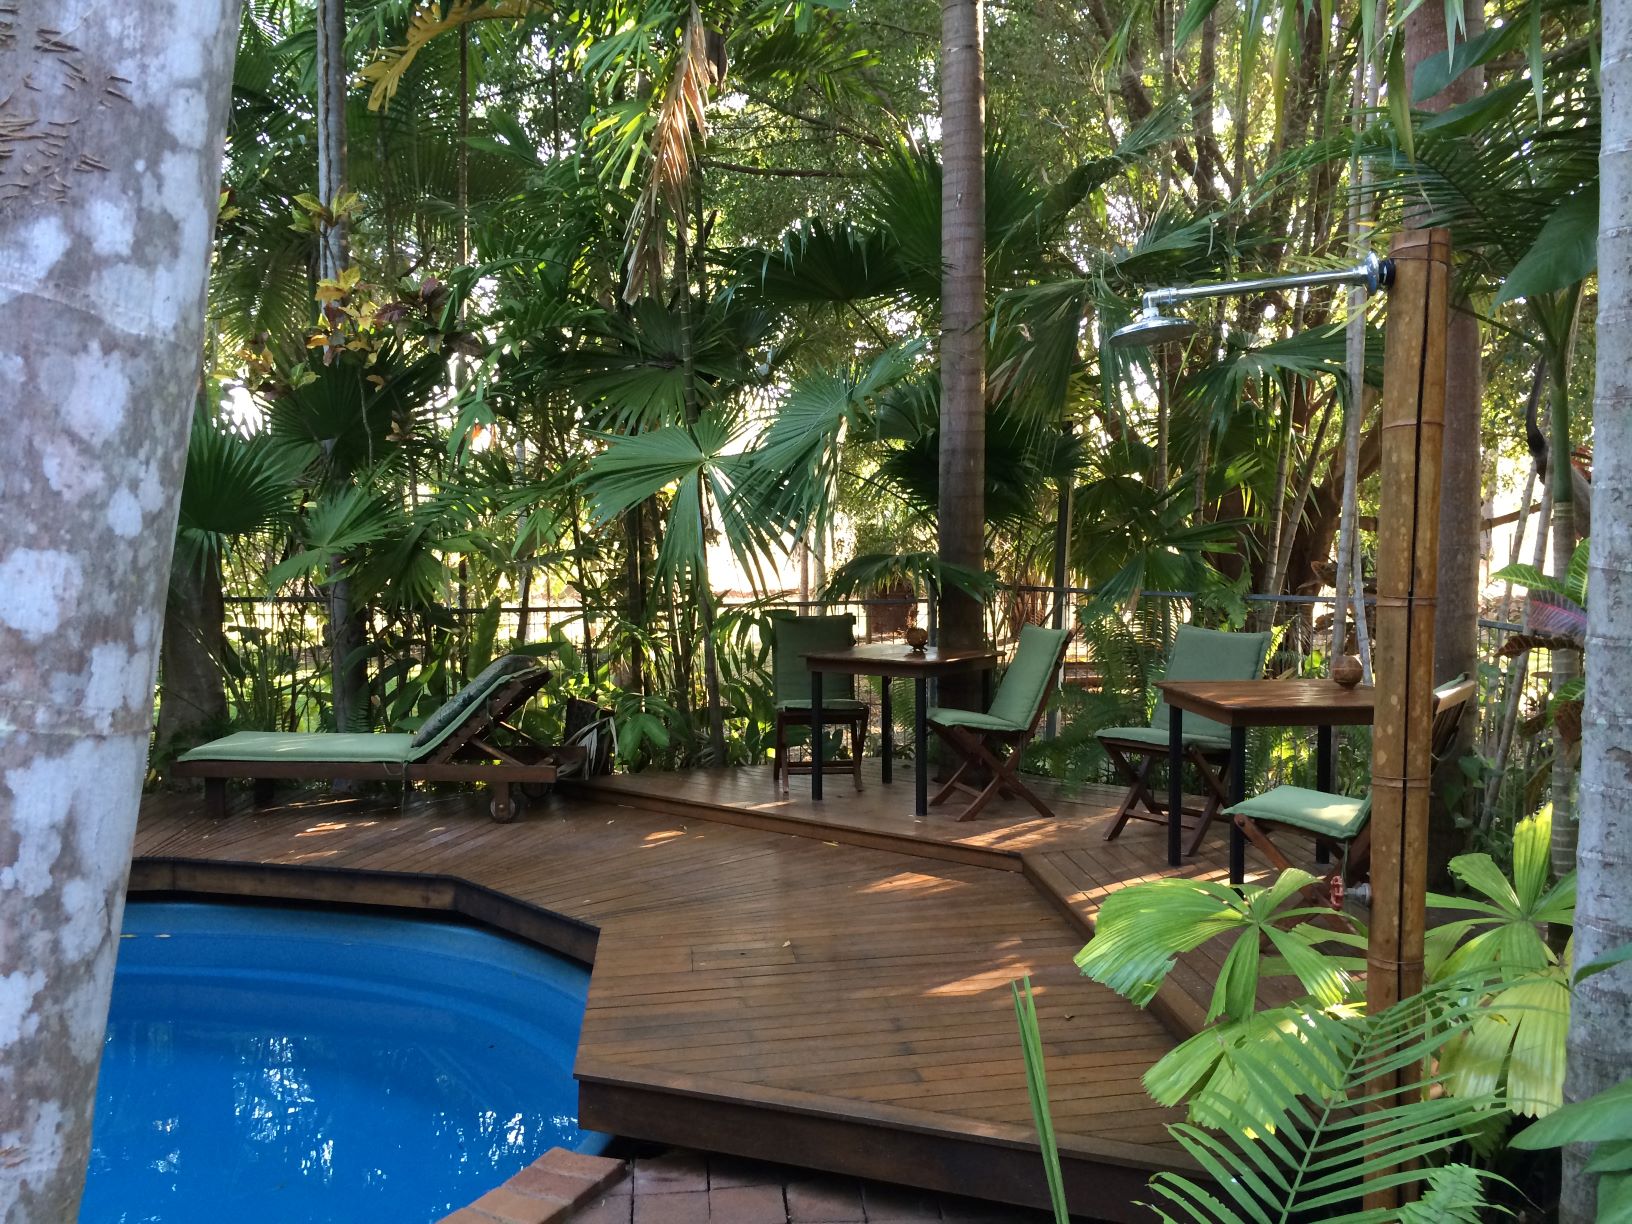 Bamboo shower in pool garden